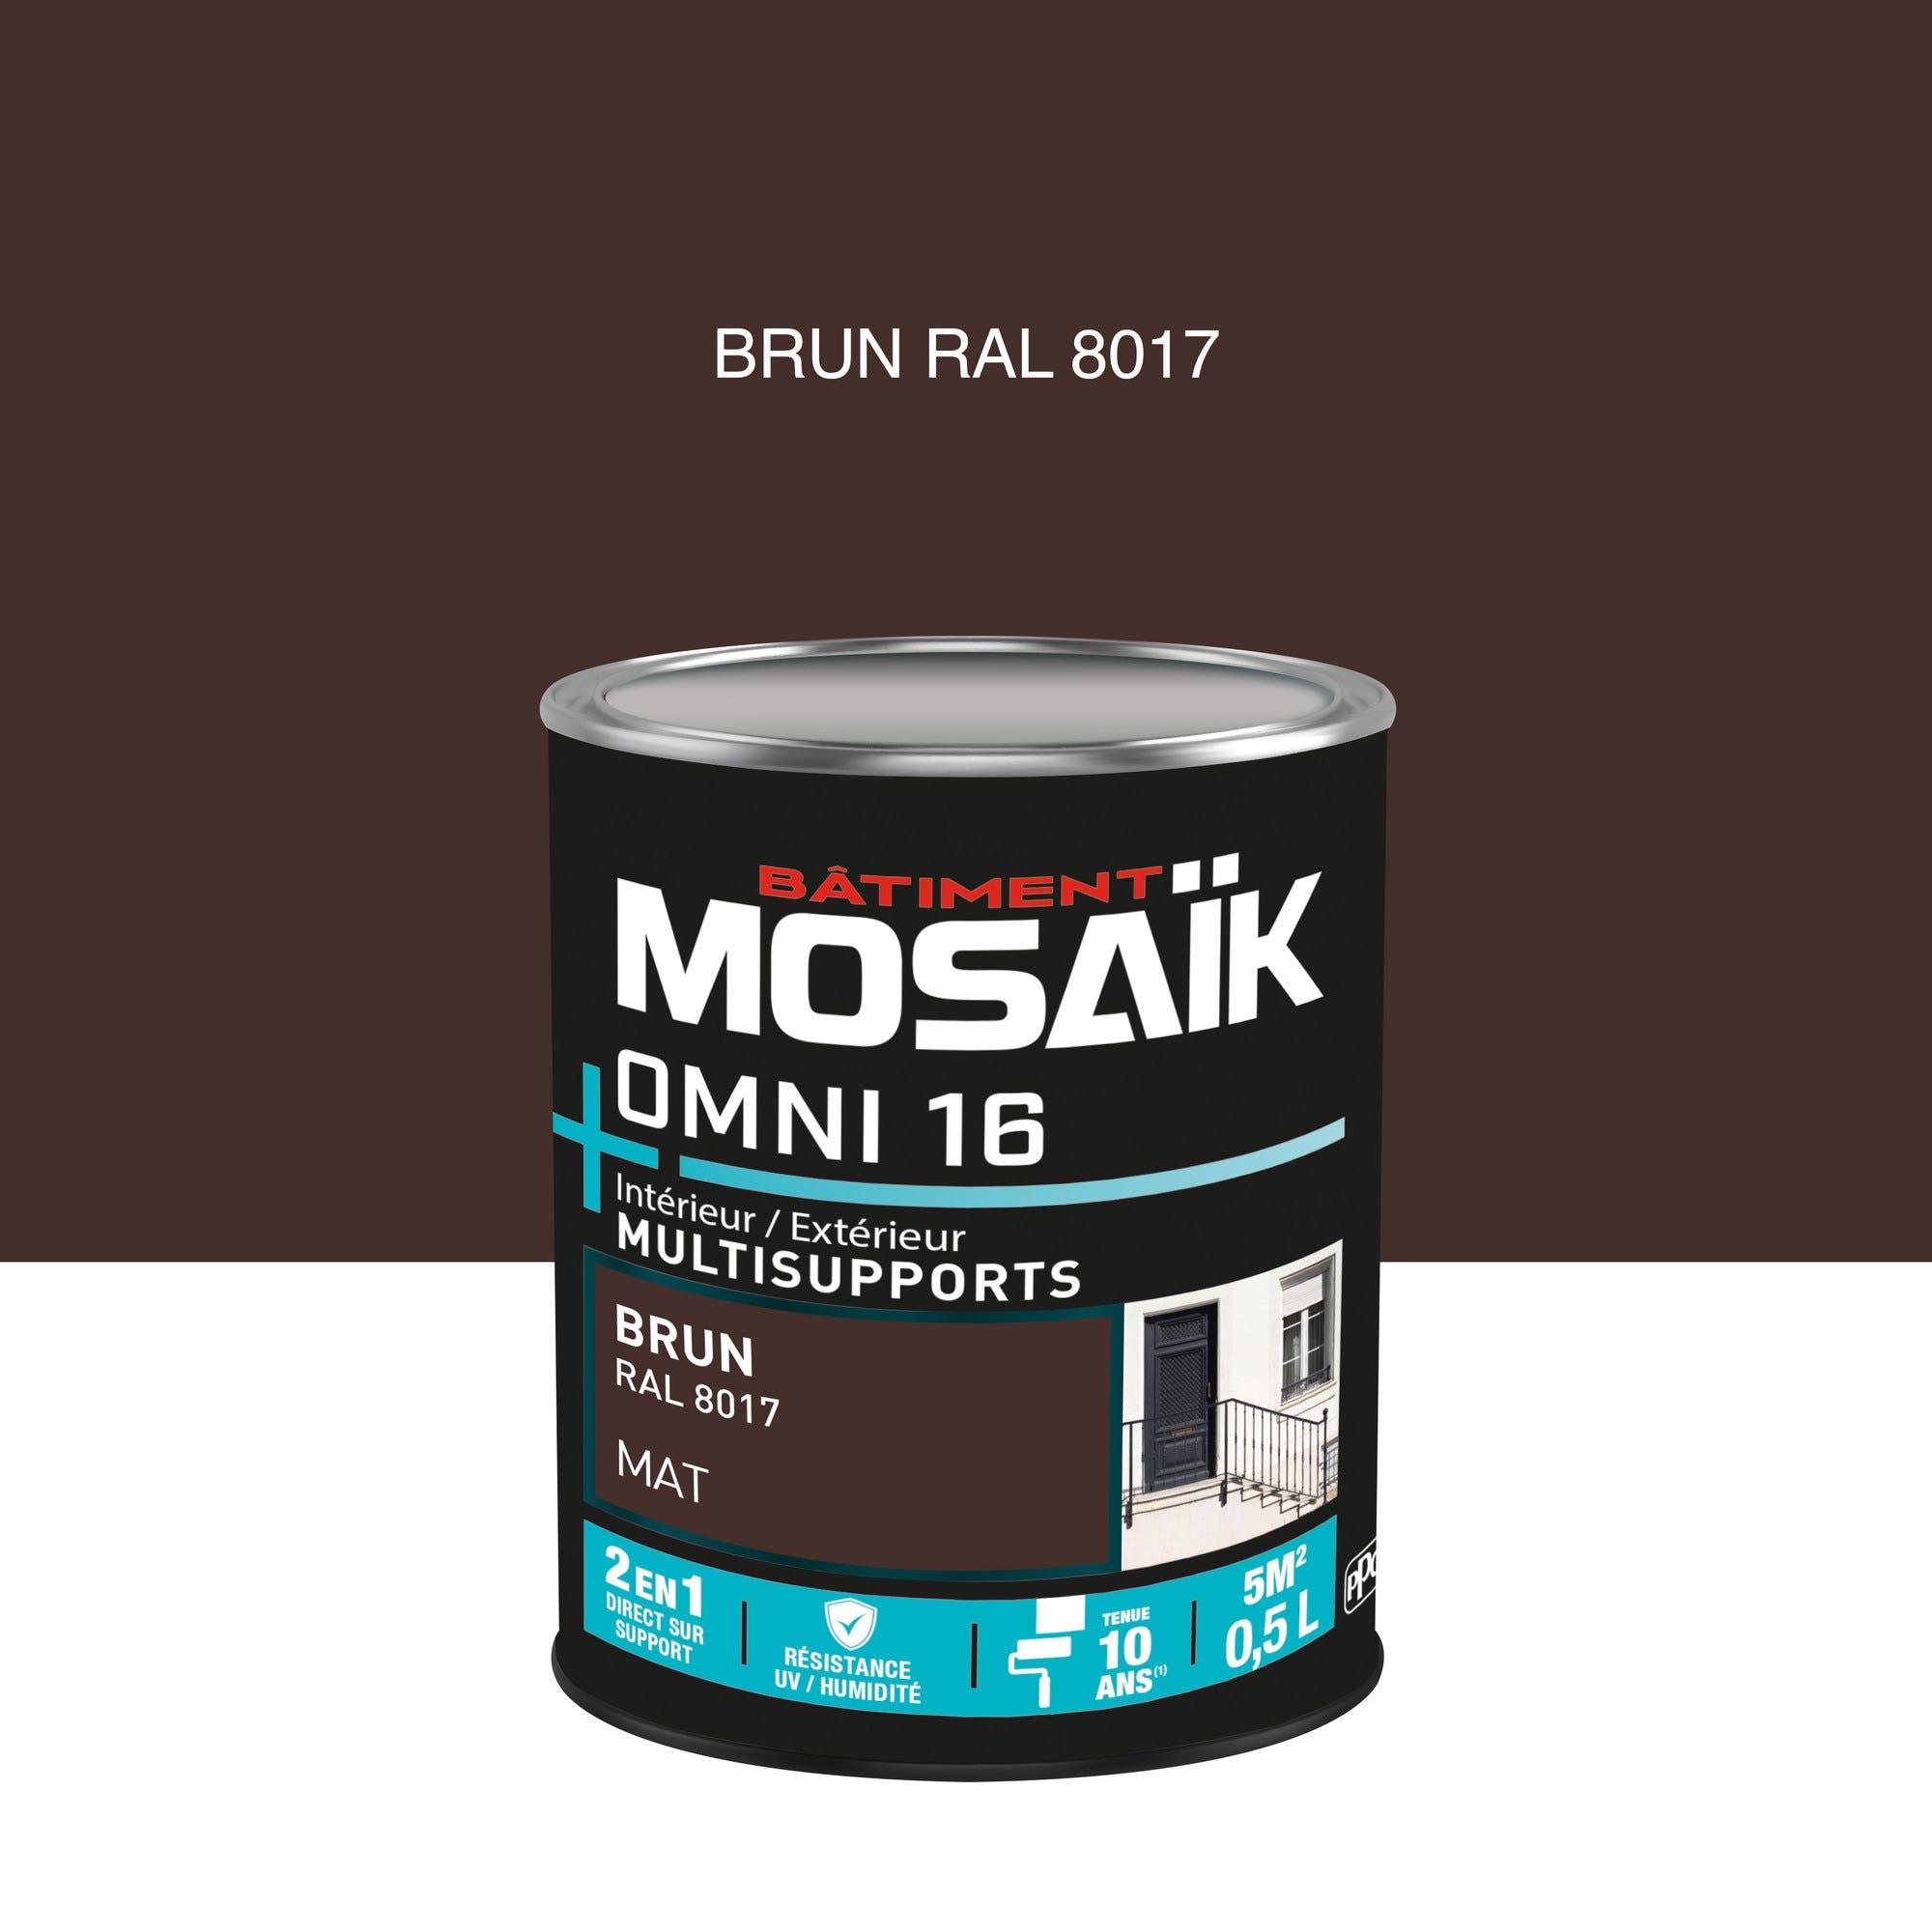 Peinture 2en1 int./ext. multisupport acrylique mat brun RAL8017 0,5 L OMNI16 - MOSAIK 0